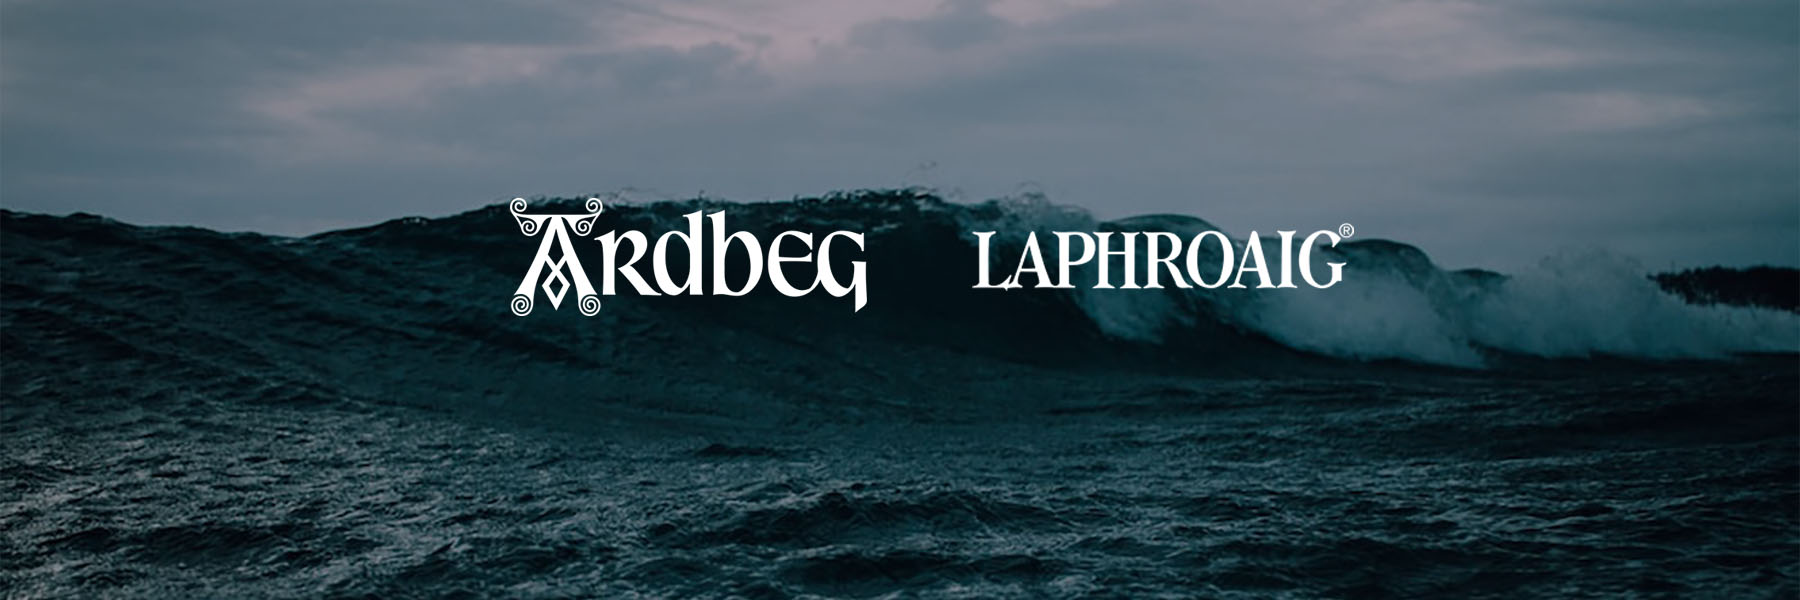 Ardbeg vs Laphroaig | Which Islay whisky is best?